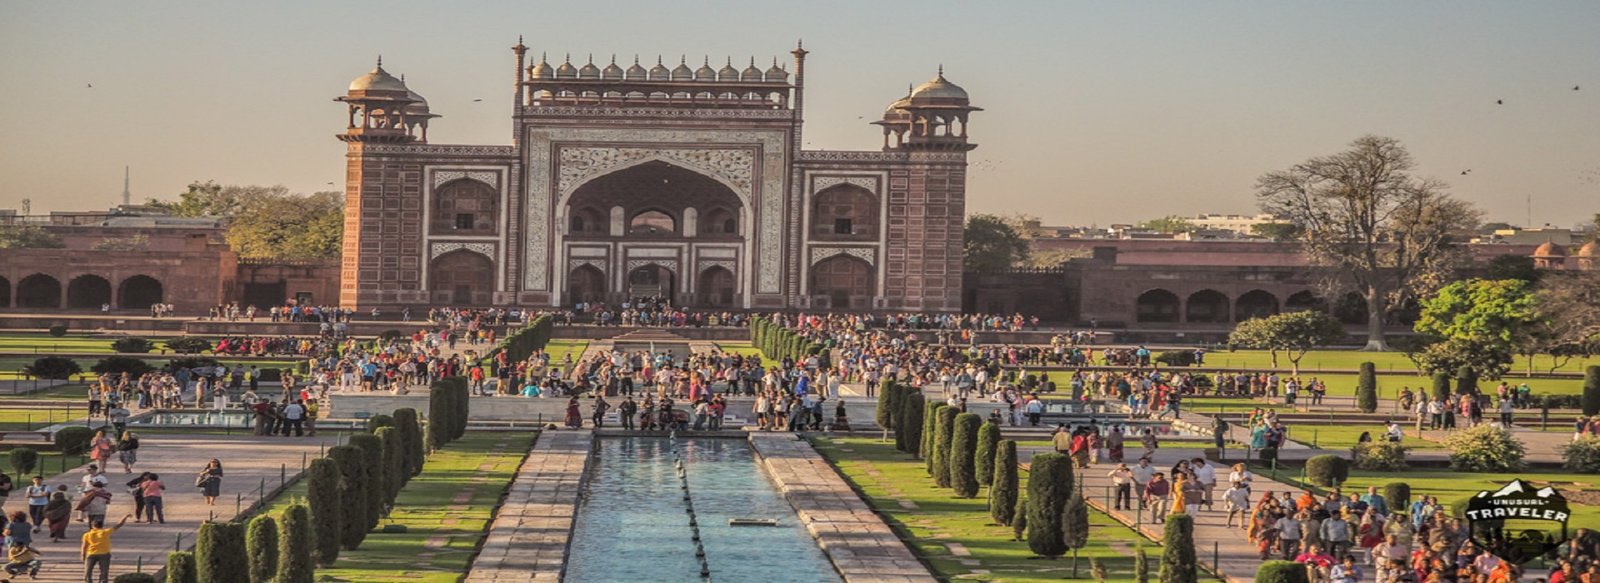 Useful Tips to Beat the Crowds at Taj Mahal